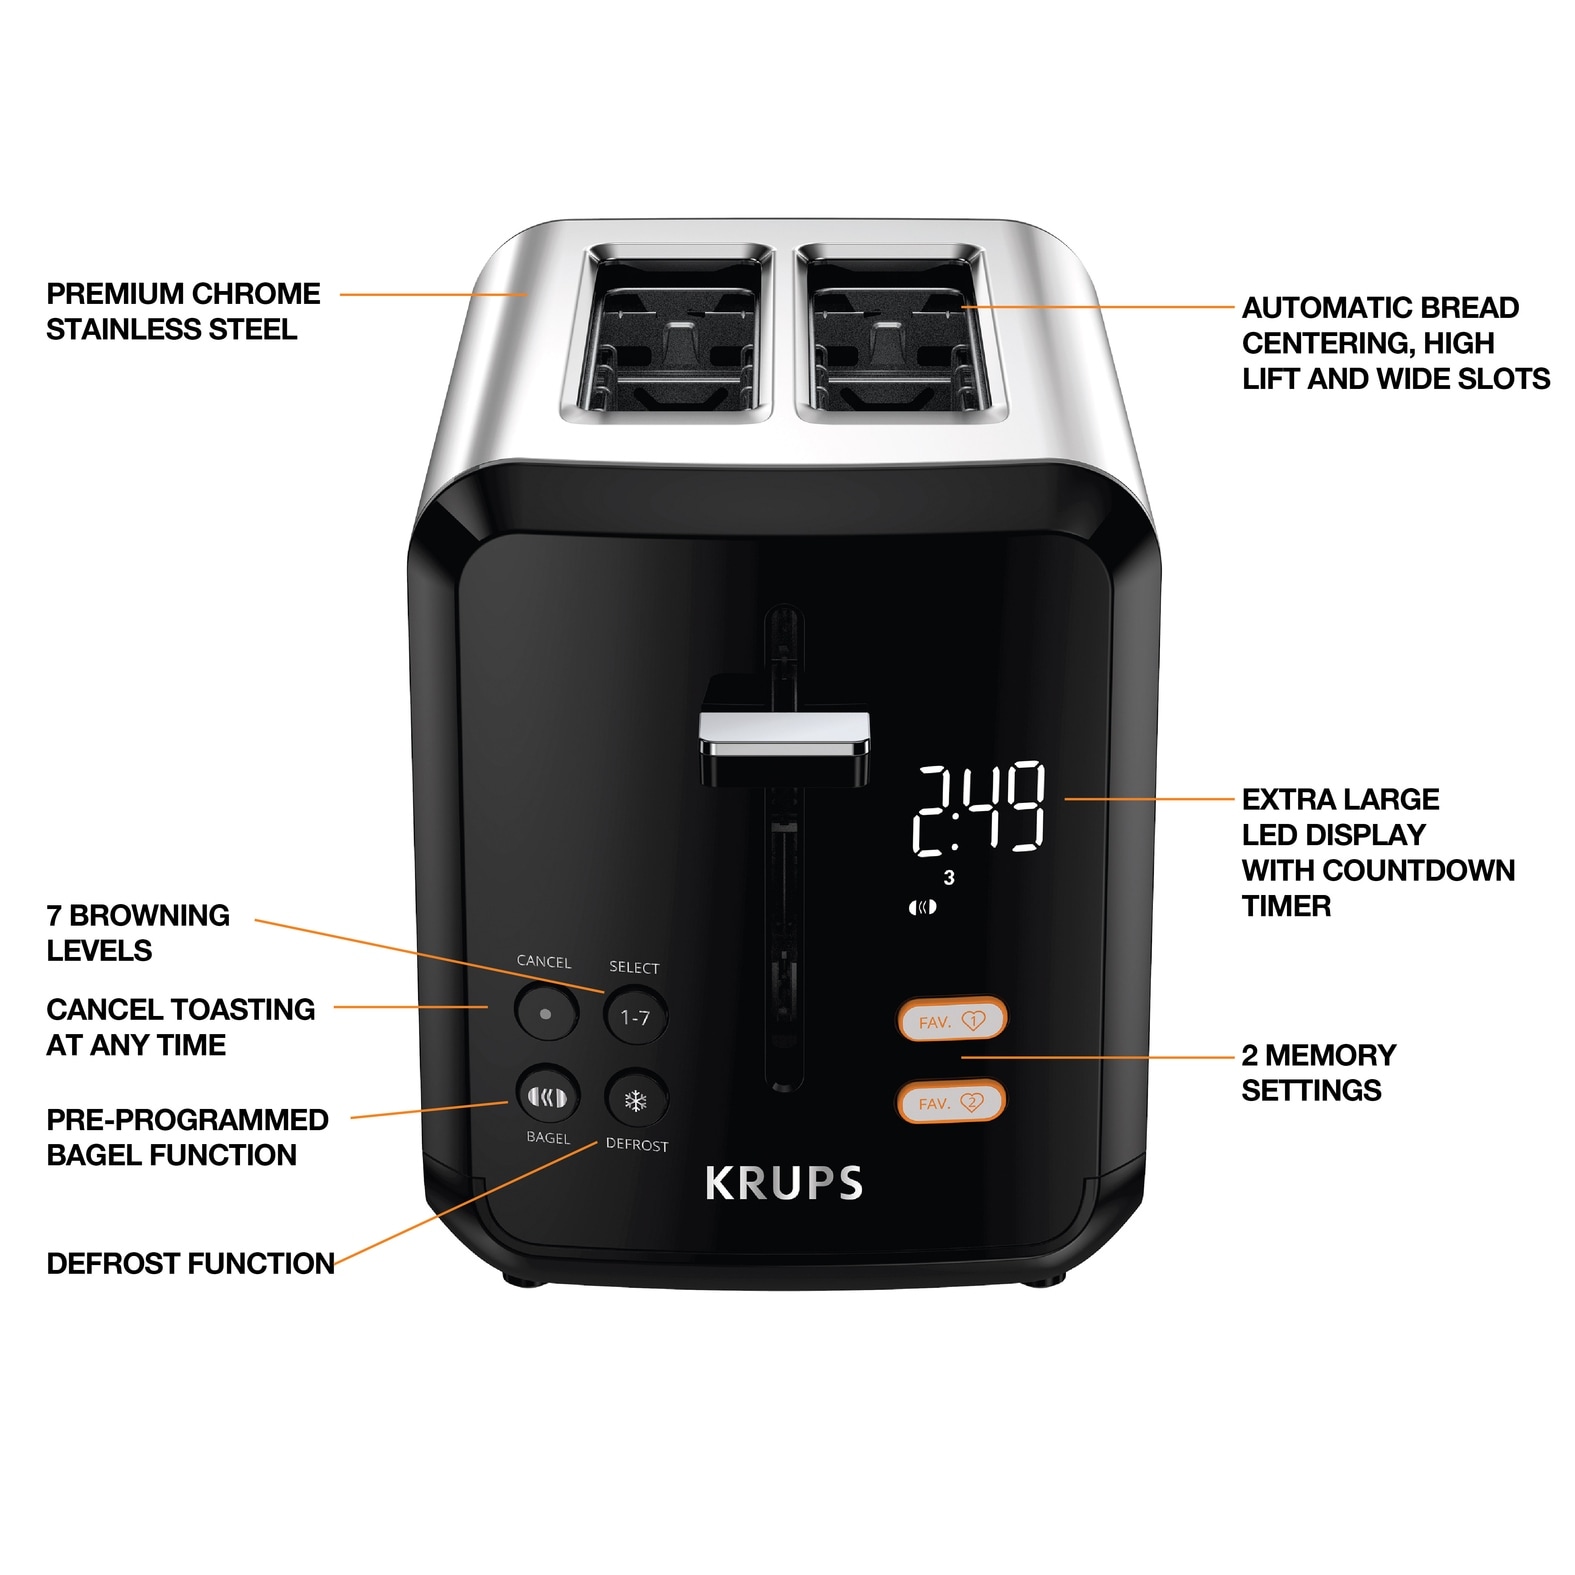  KRUPS Breakfast Essentials Stainless Steel Toaster, 4